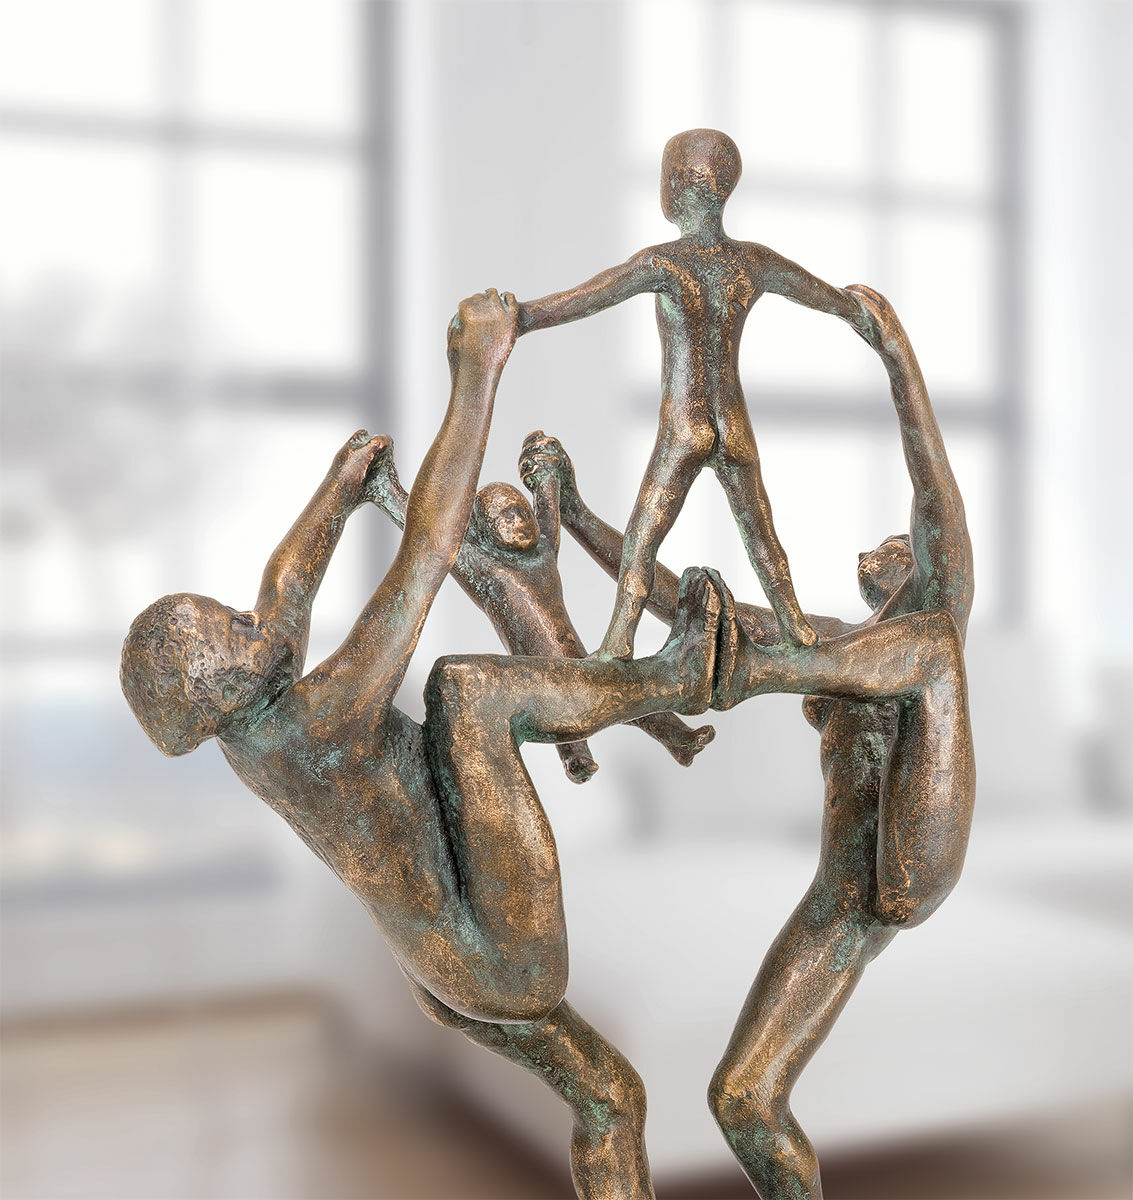 Sculpture "Family on Wheels", bronze by Adelbert Heil